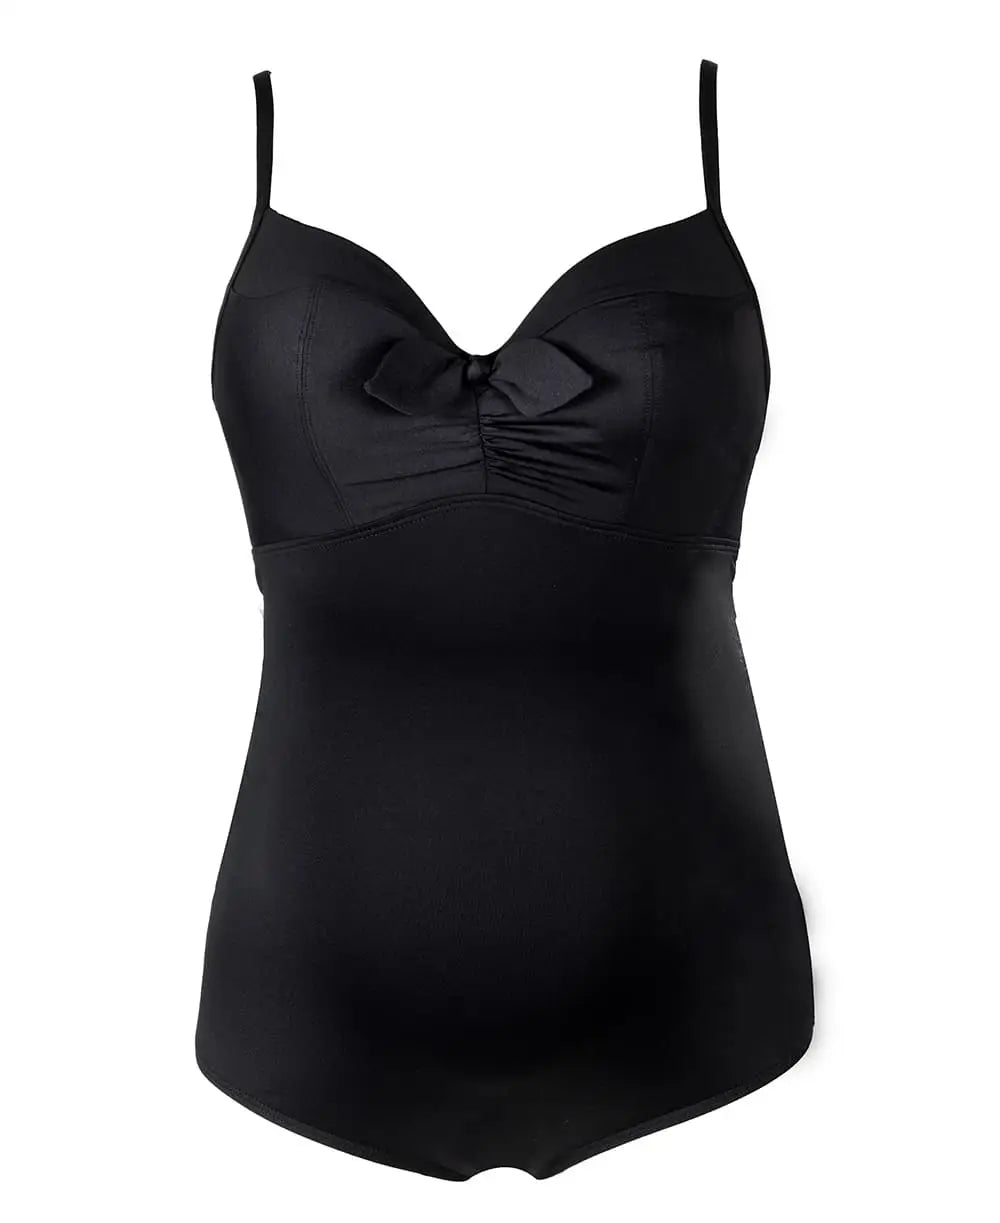 Underwired maternity swimsuit Monaco black